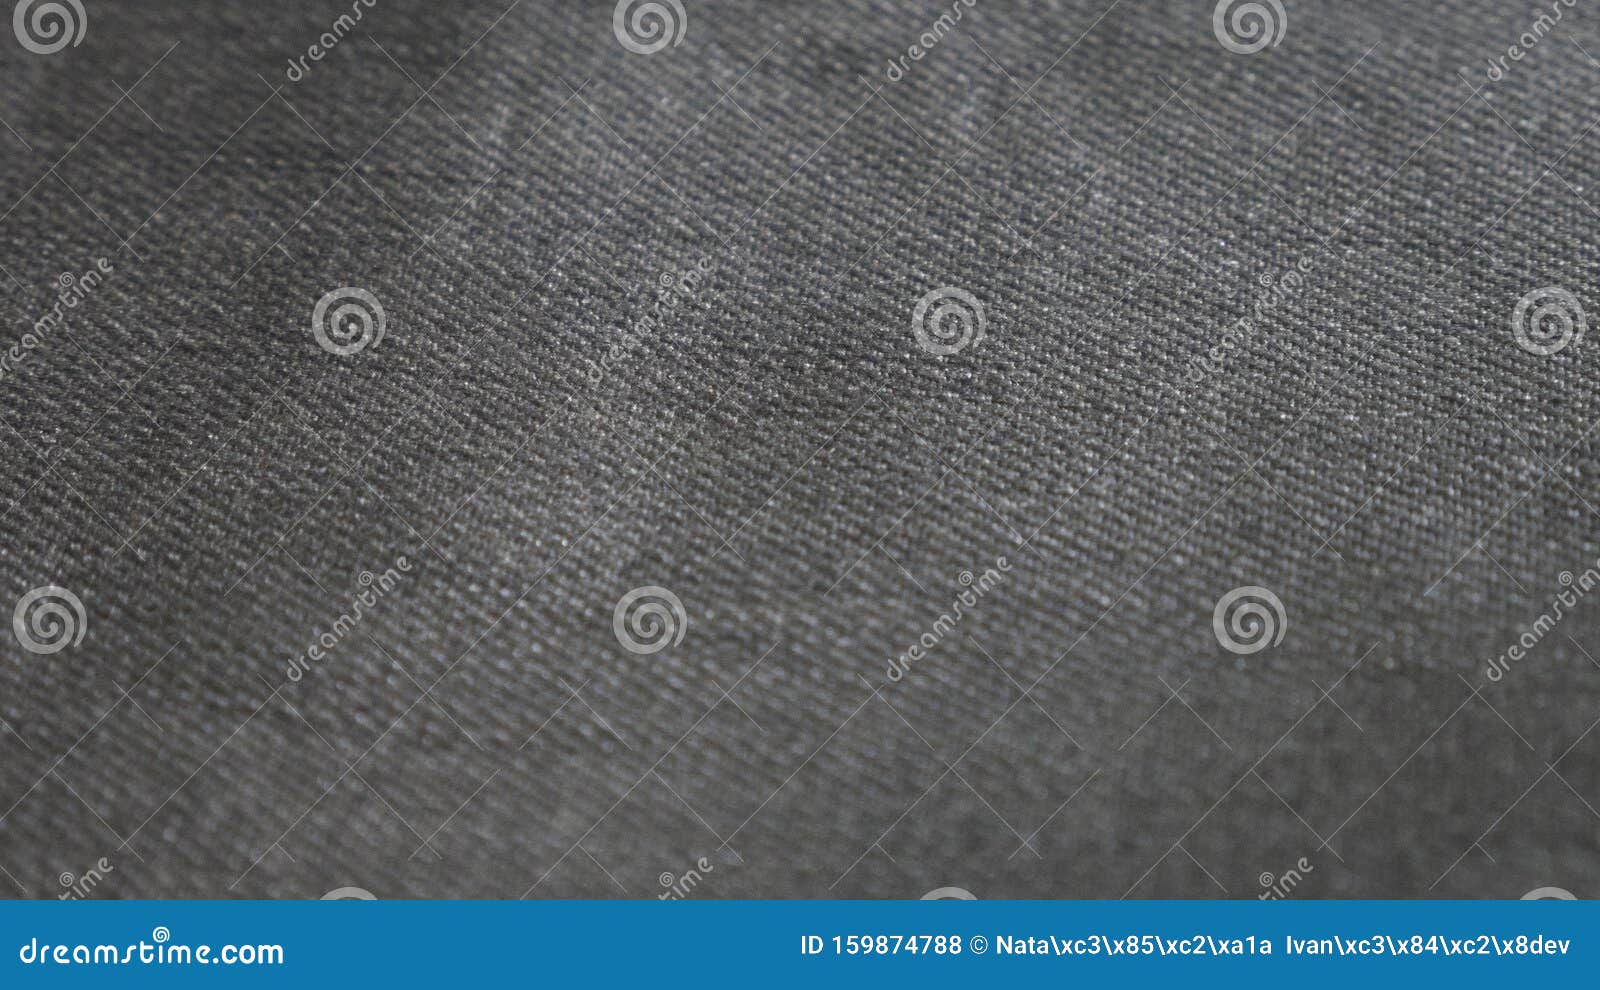 Gray Denim Fabric Wallpaper Stock Photo - Image of gray, cloth: 159874788